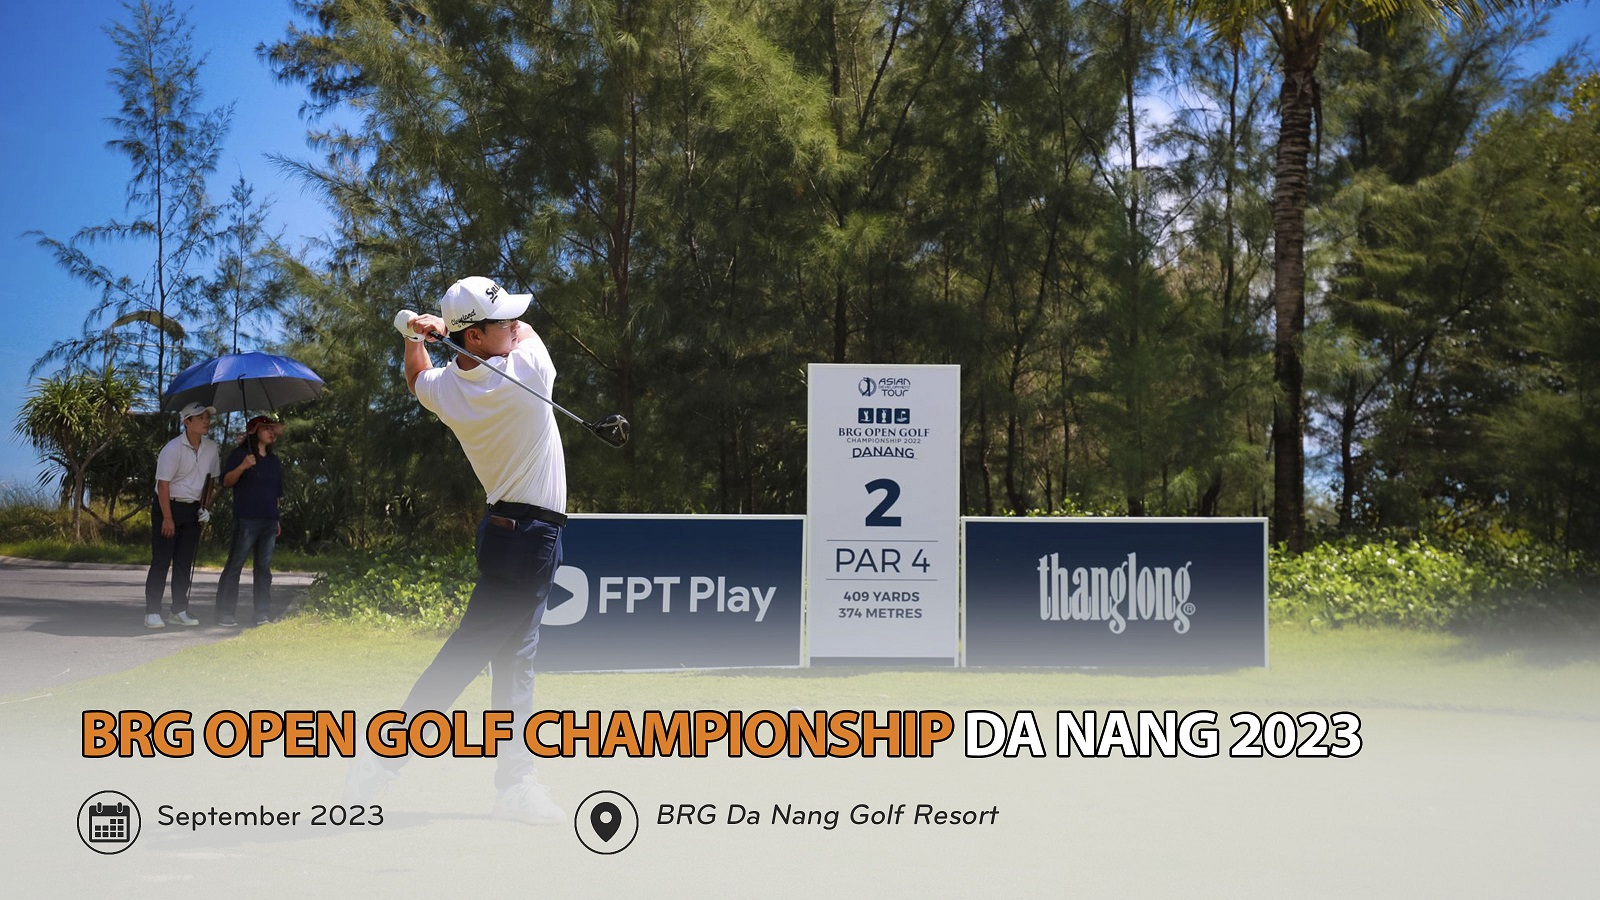 21 Brg Open Golf Championship Da Nang 2023